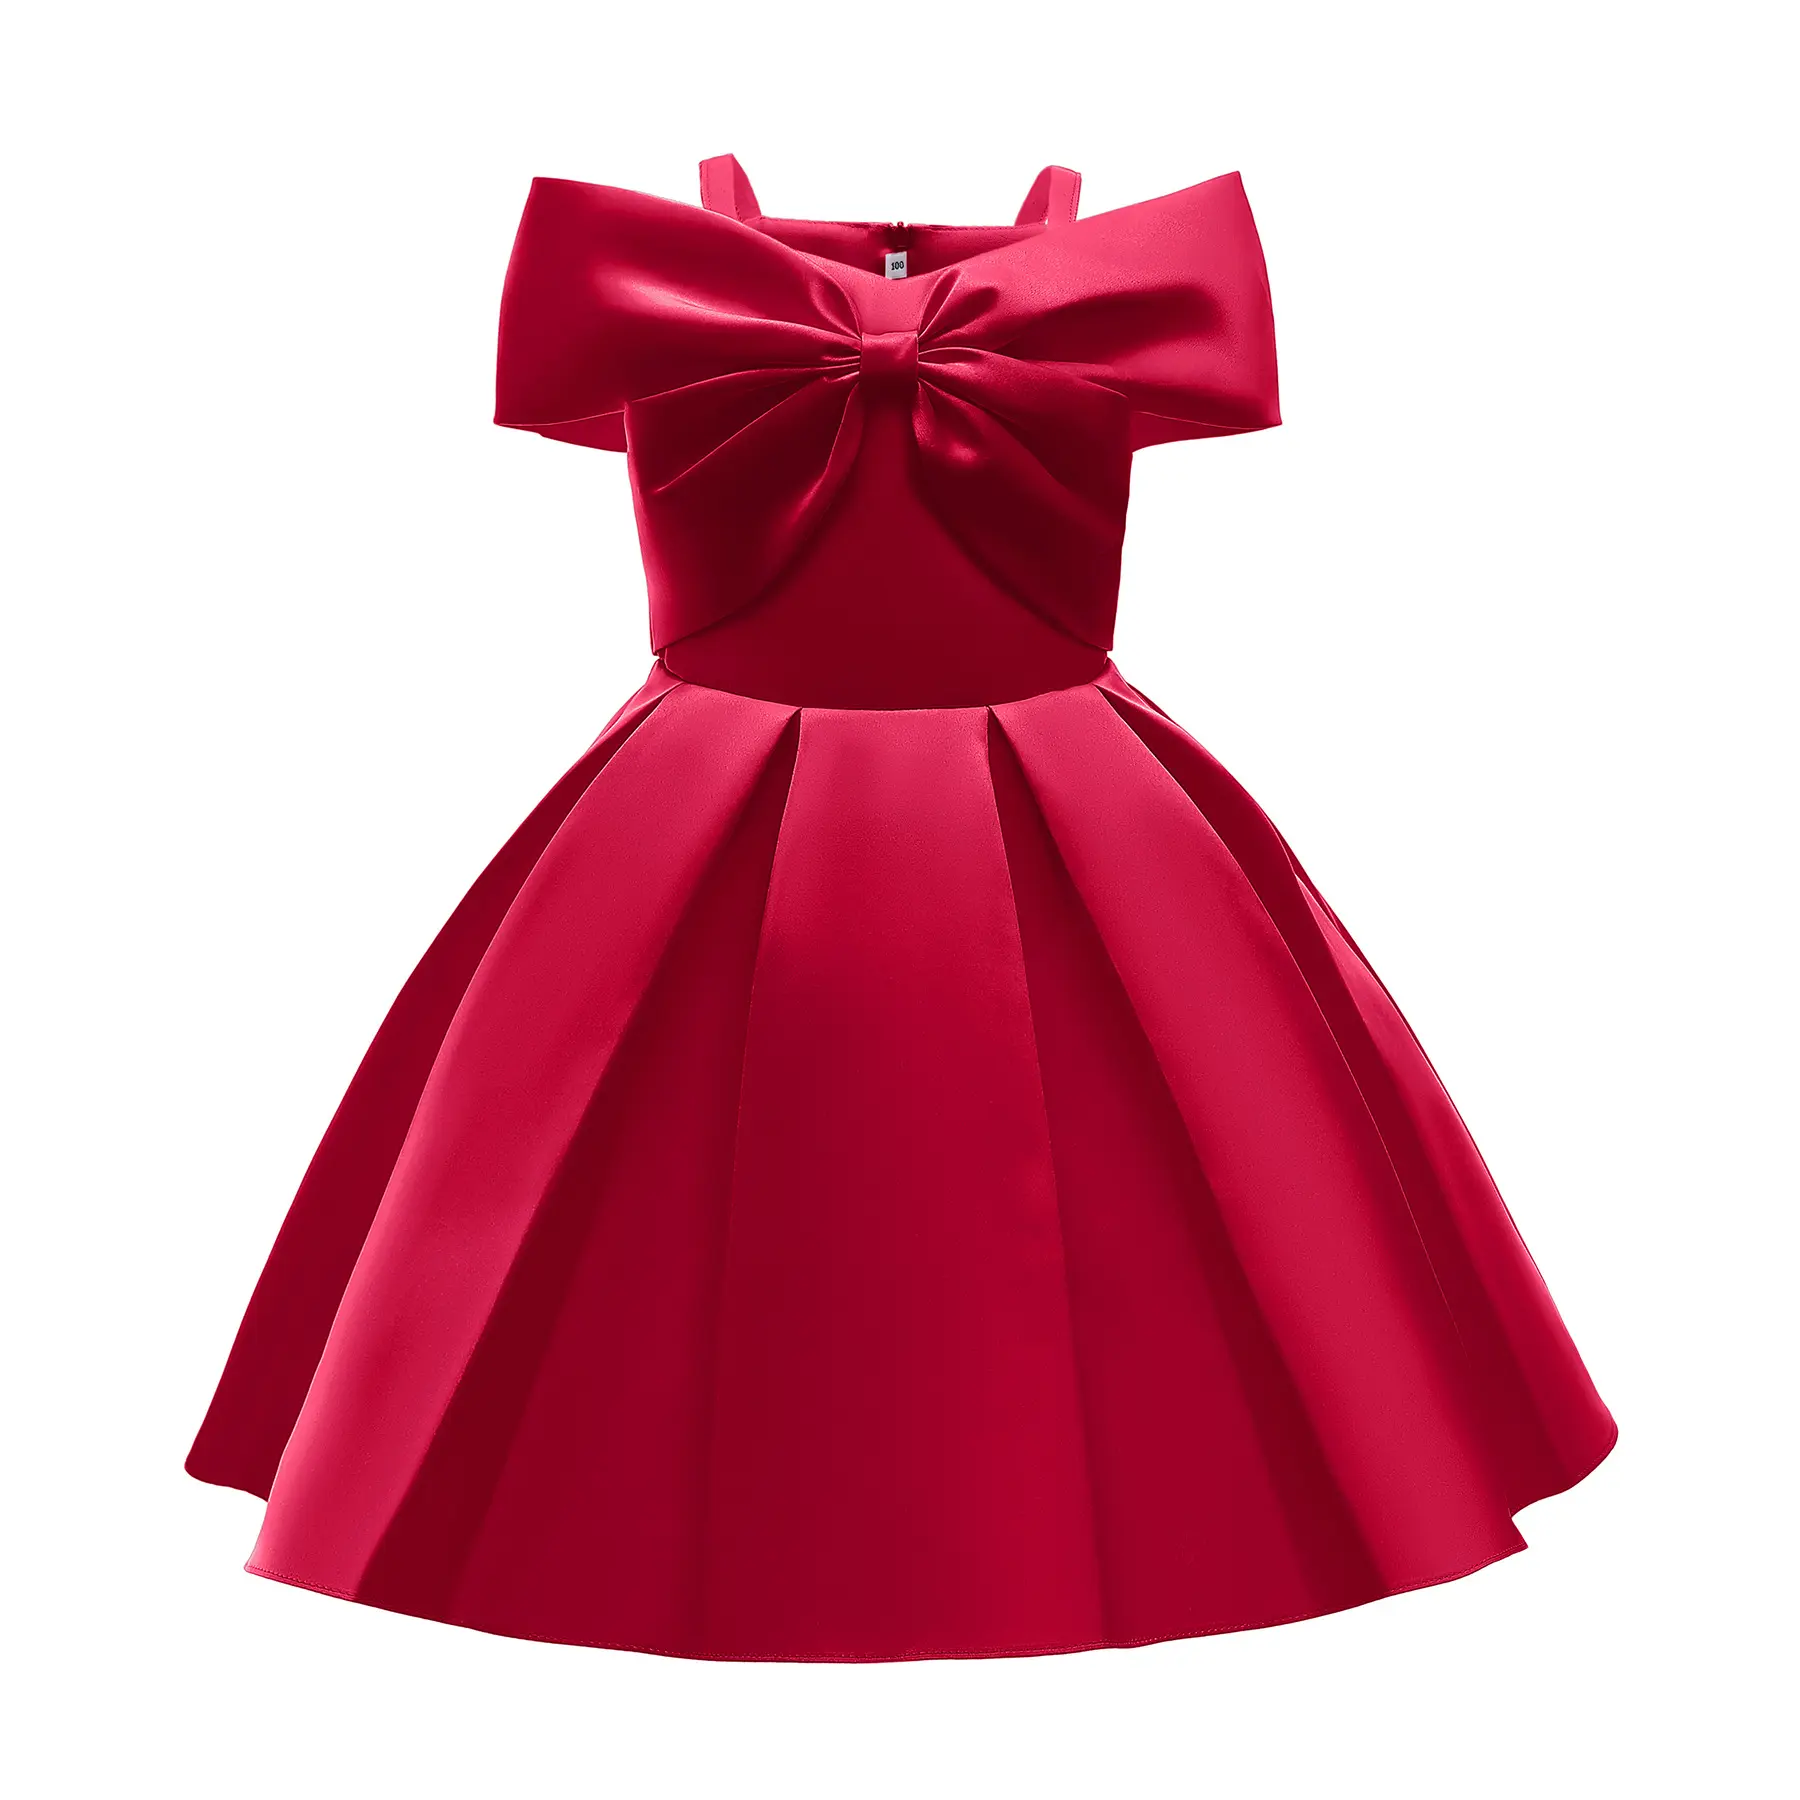 Little Girls Princess Dress Cute Lovely Sleeveless Bow Skirt Kids Clothes Mini Dresses Red Pink